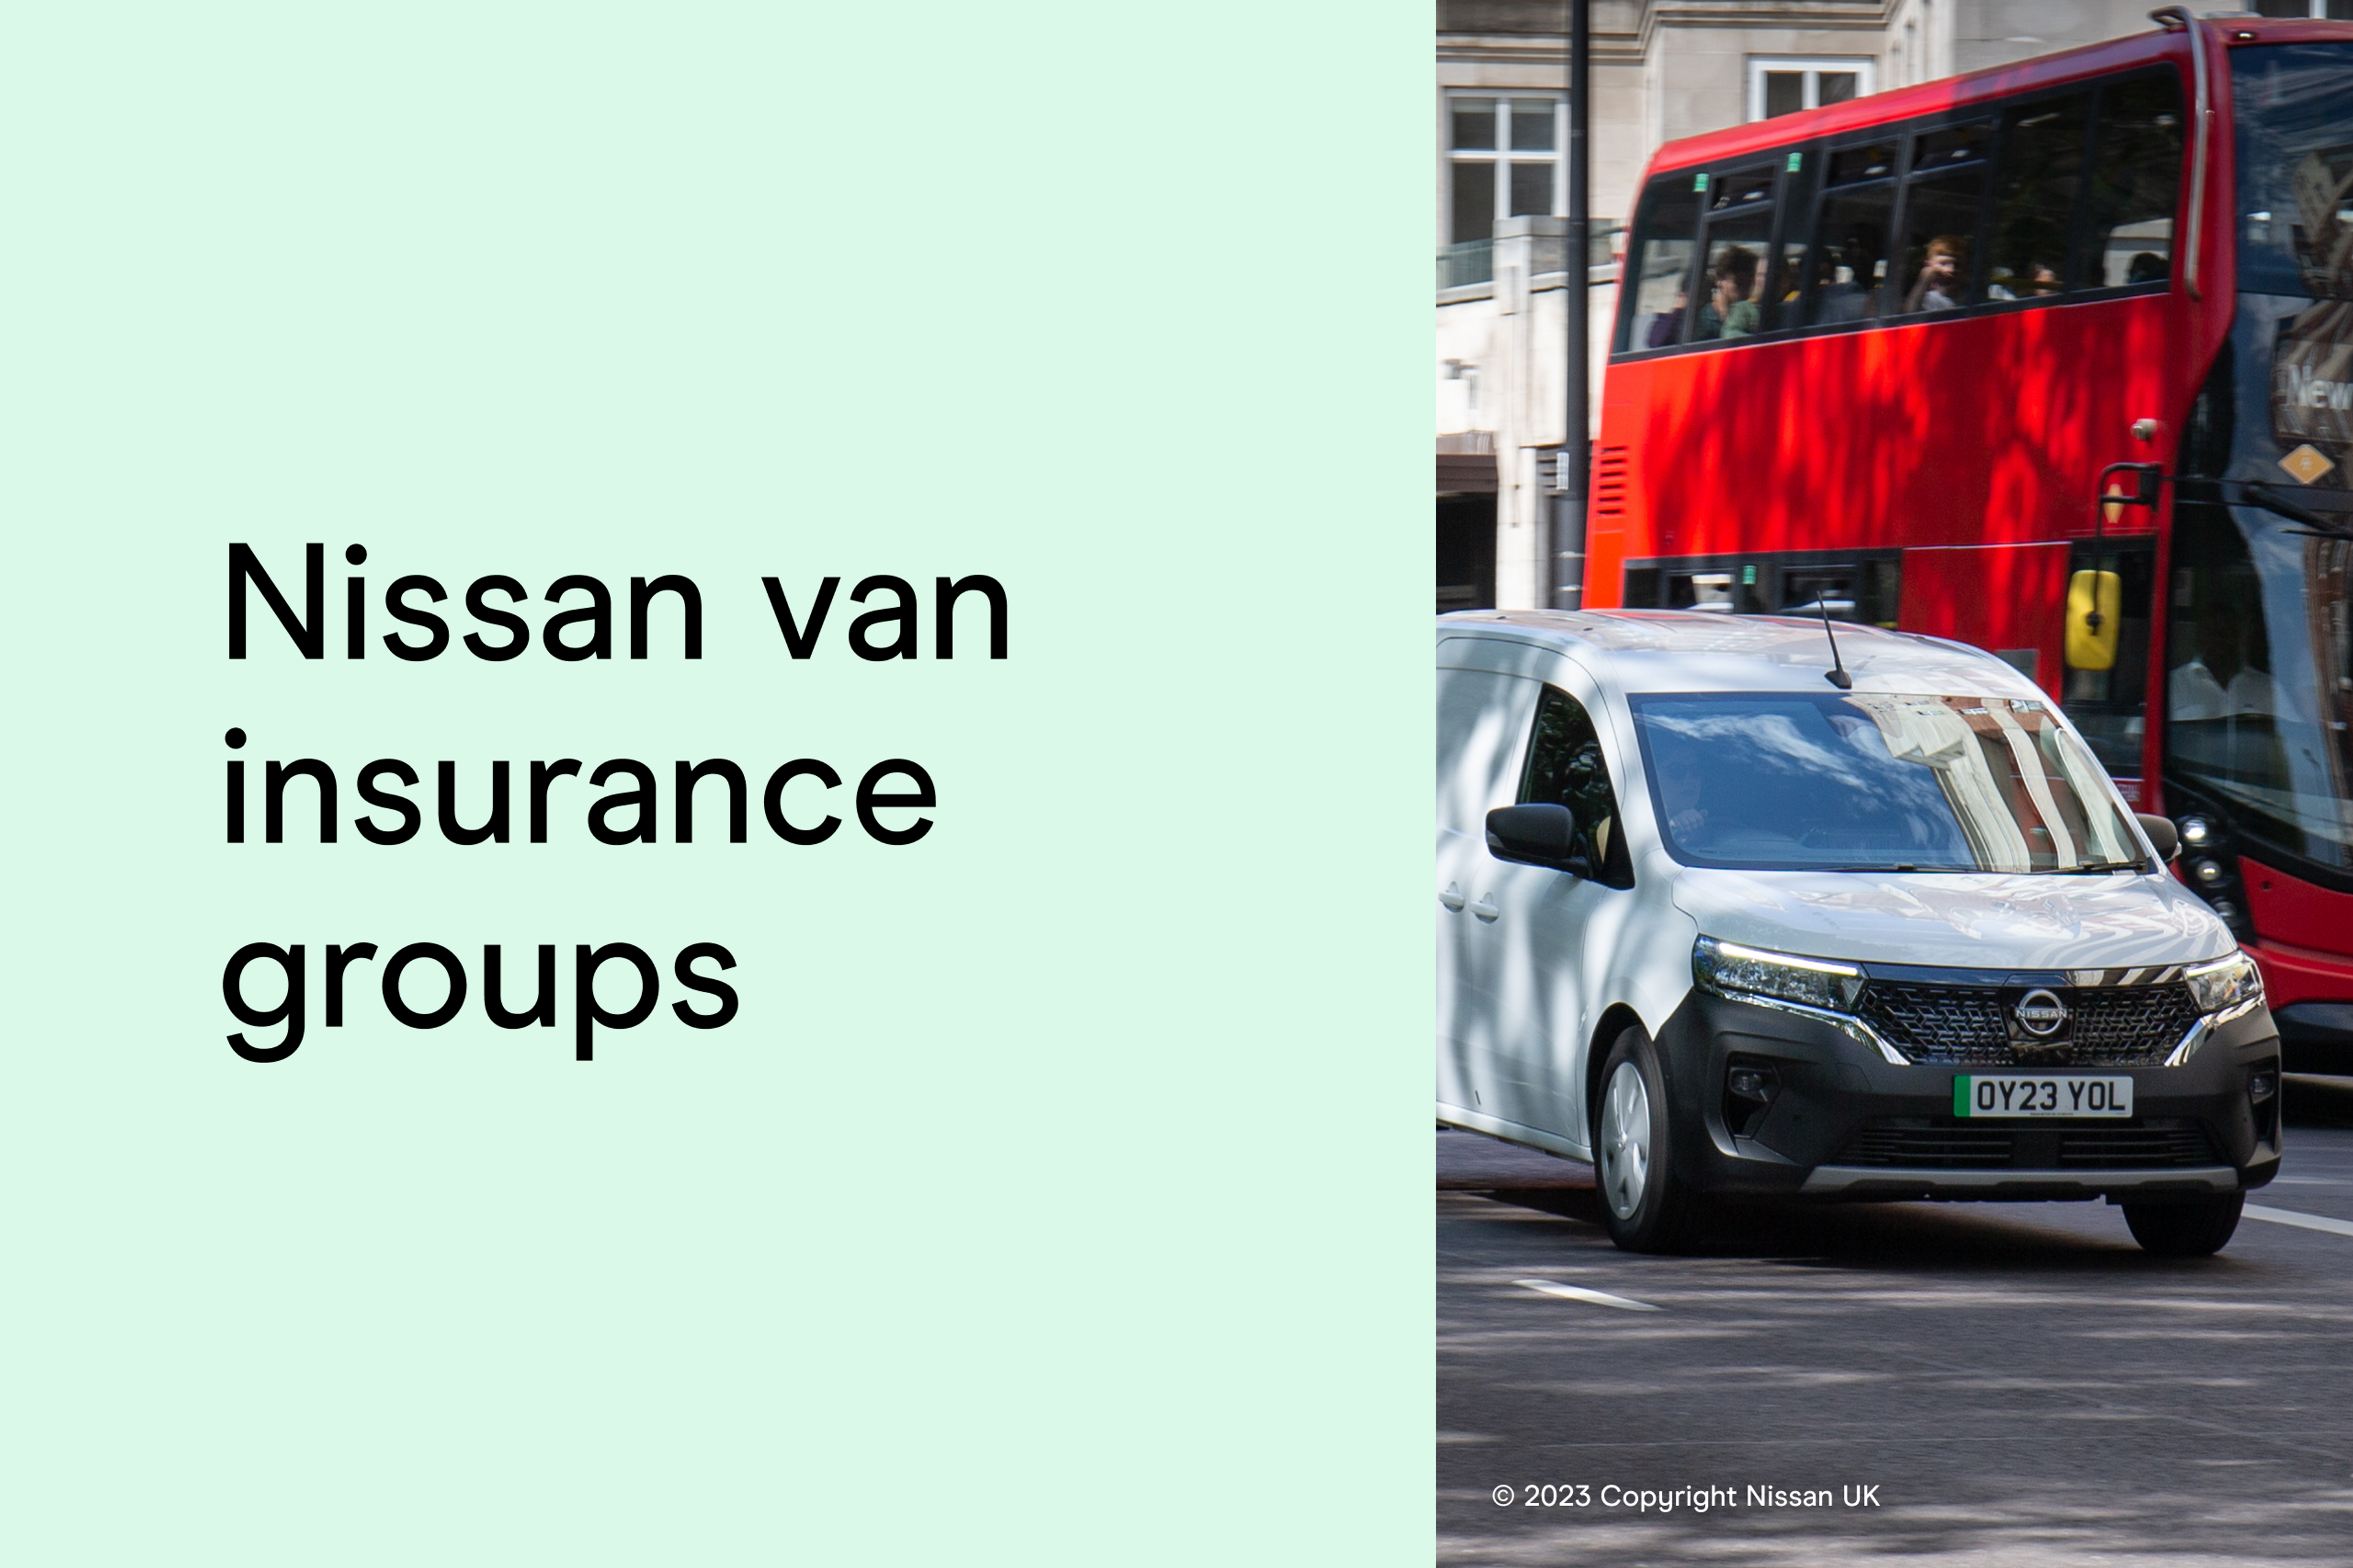 Nissan van insurance groups